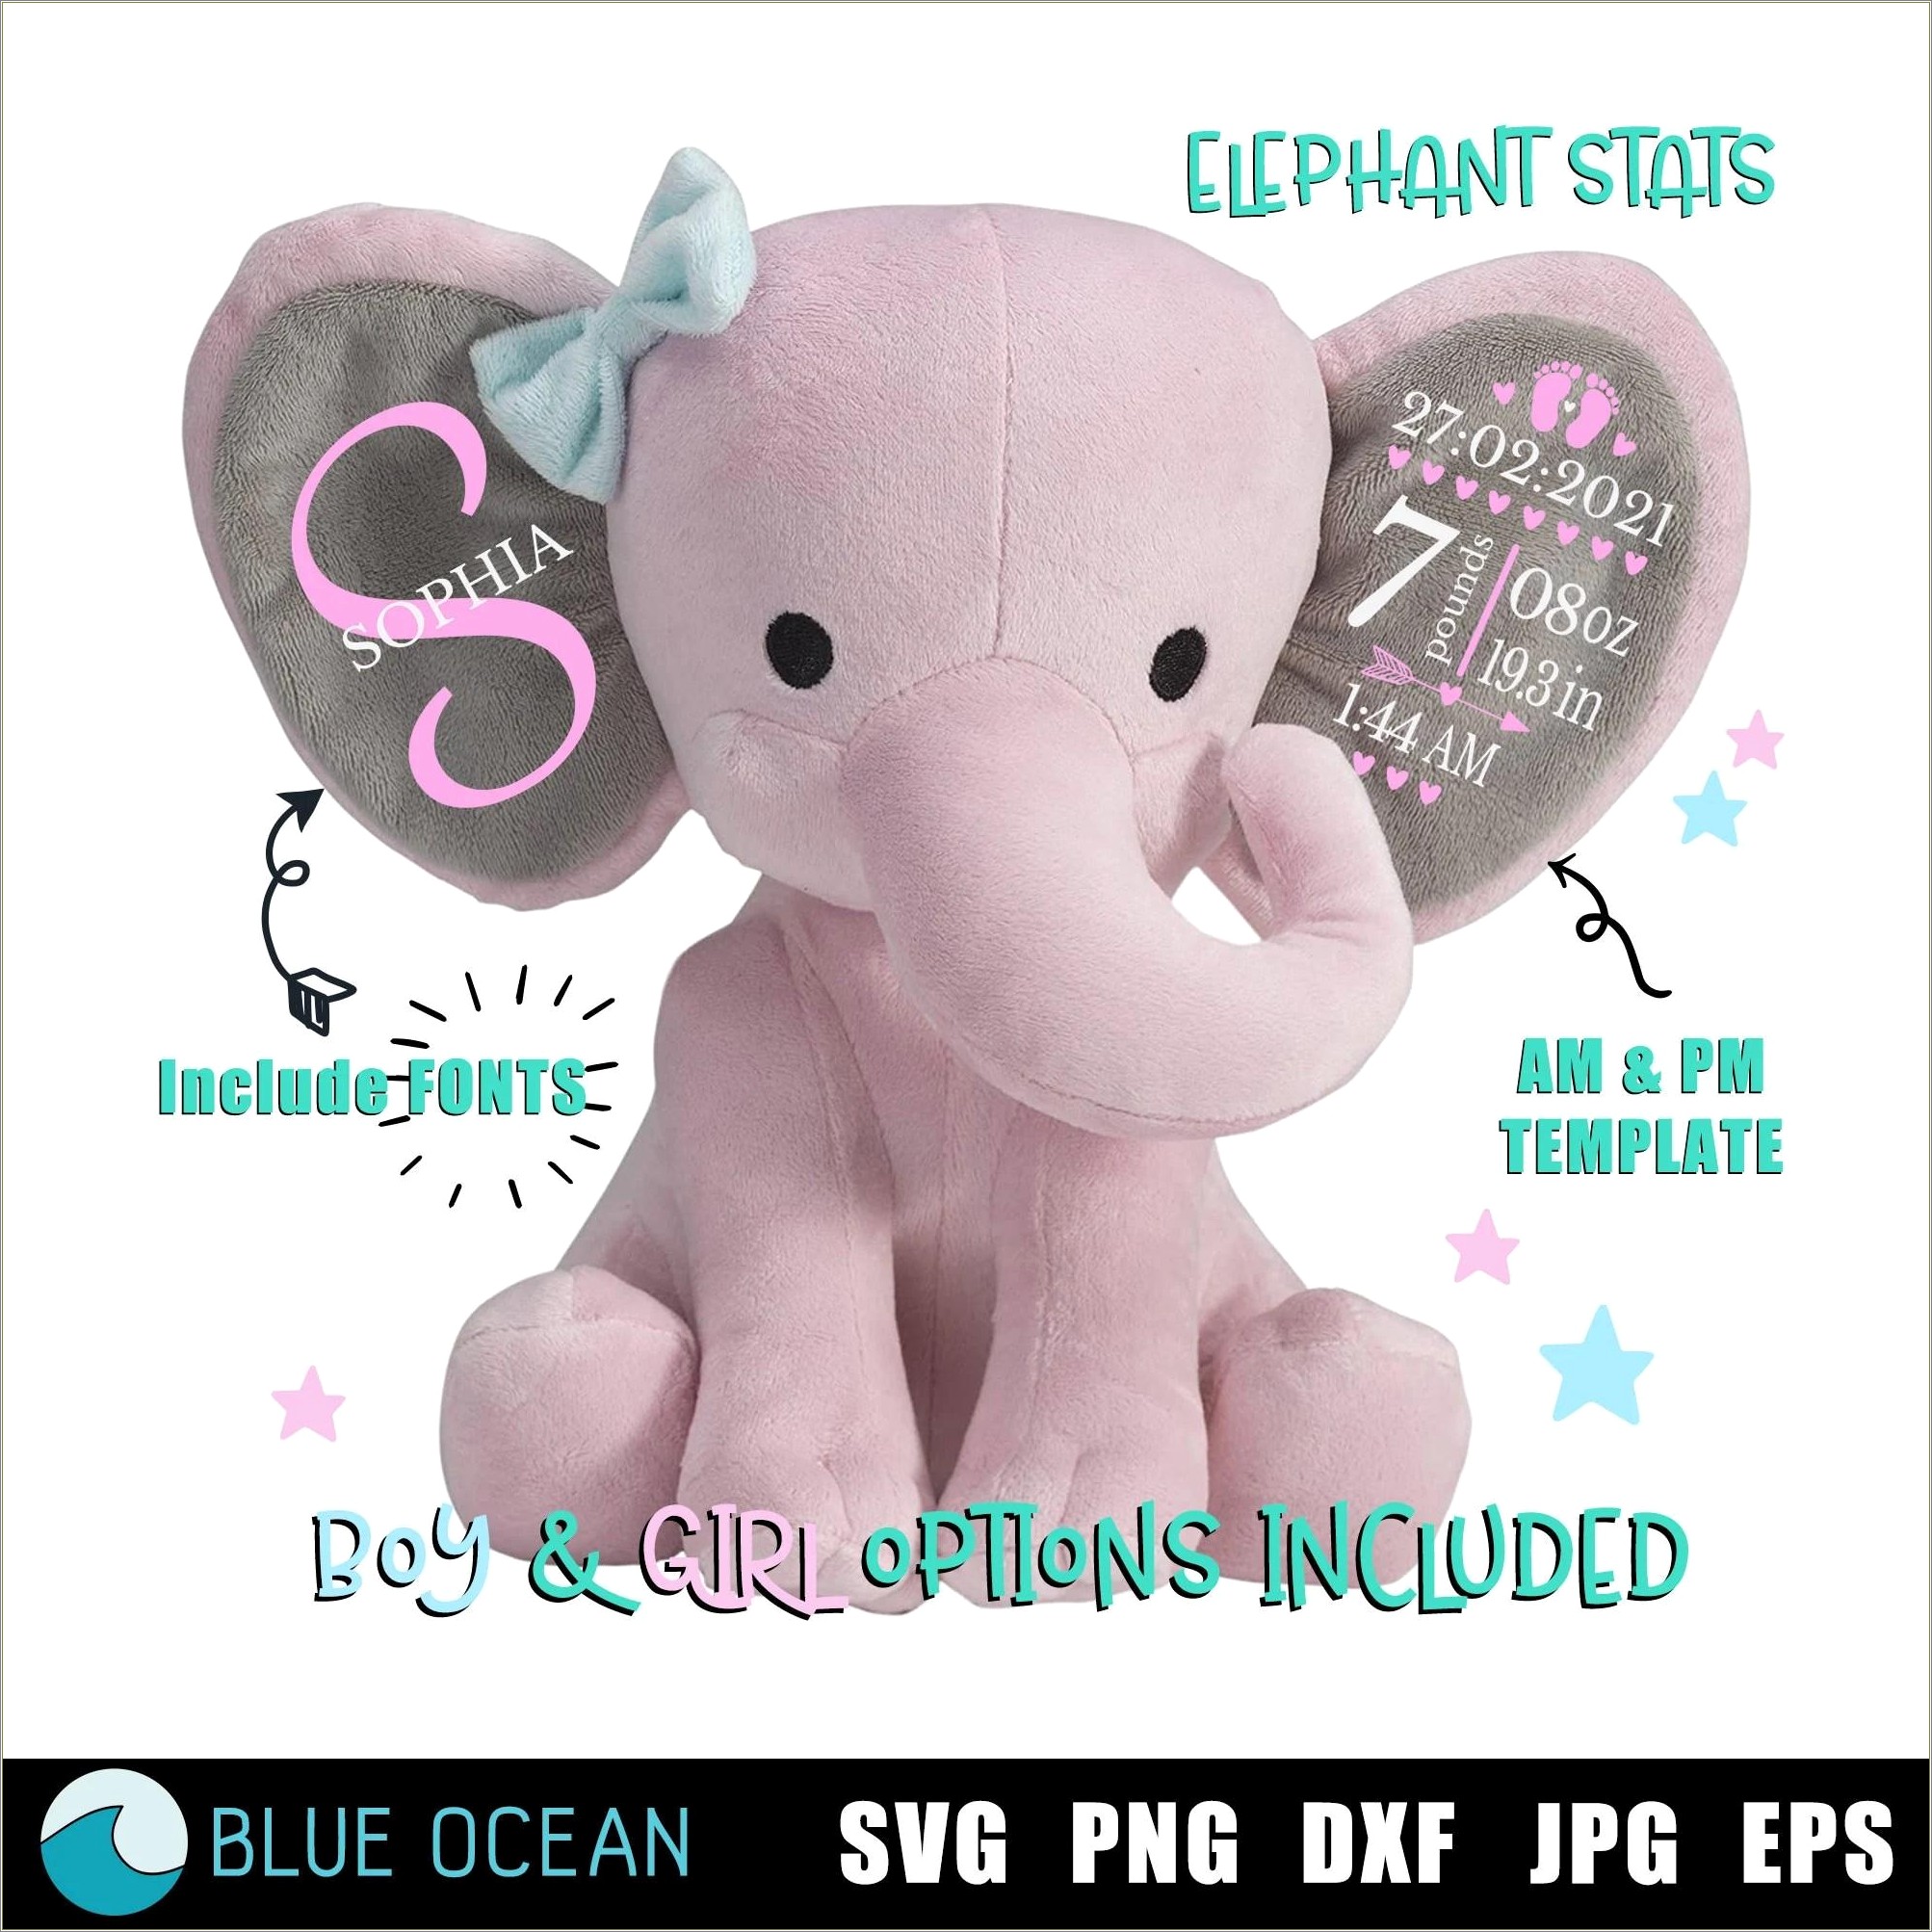 Elephant Ear Birth Stat Template Free